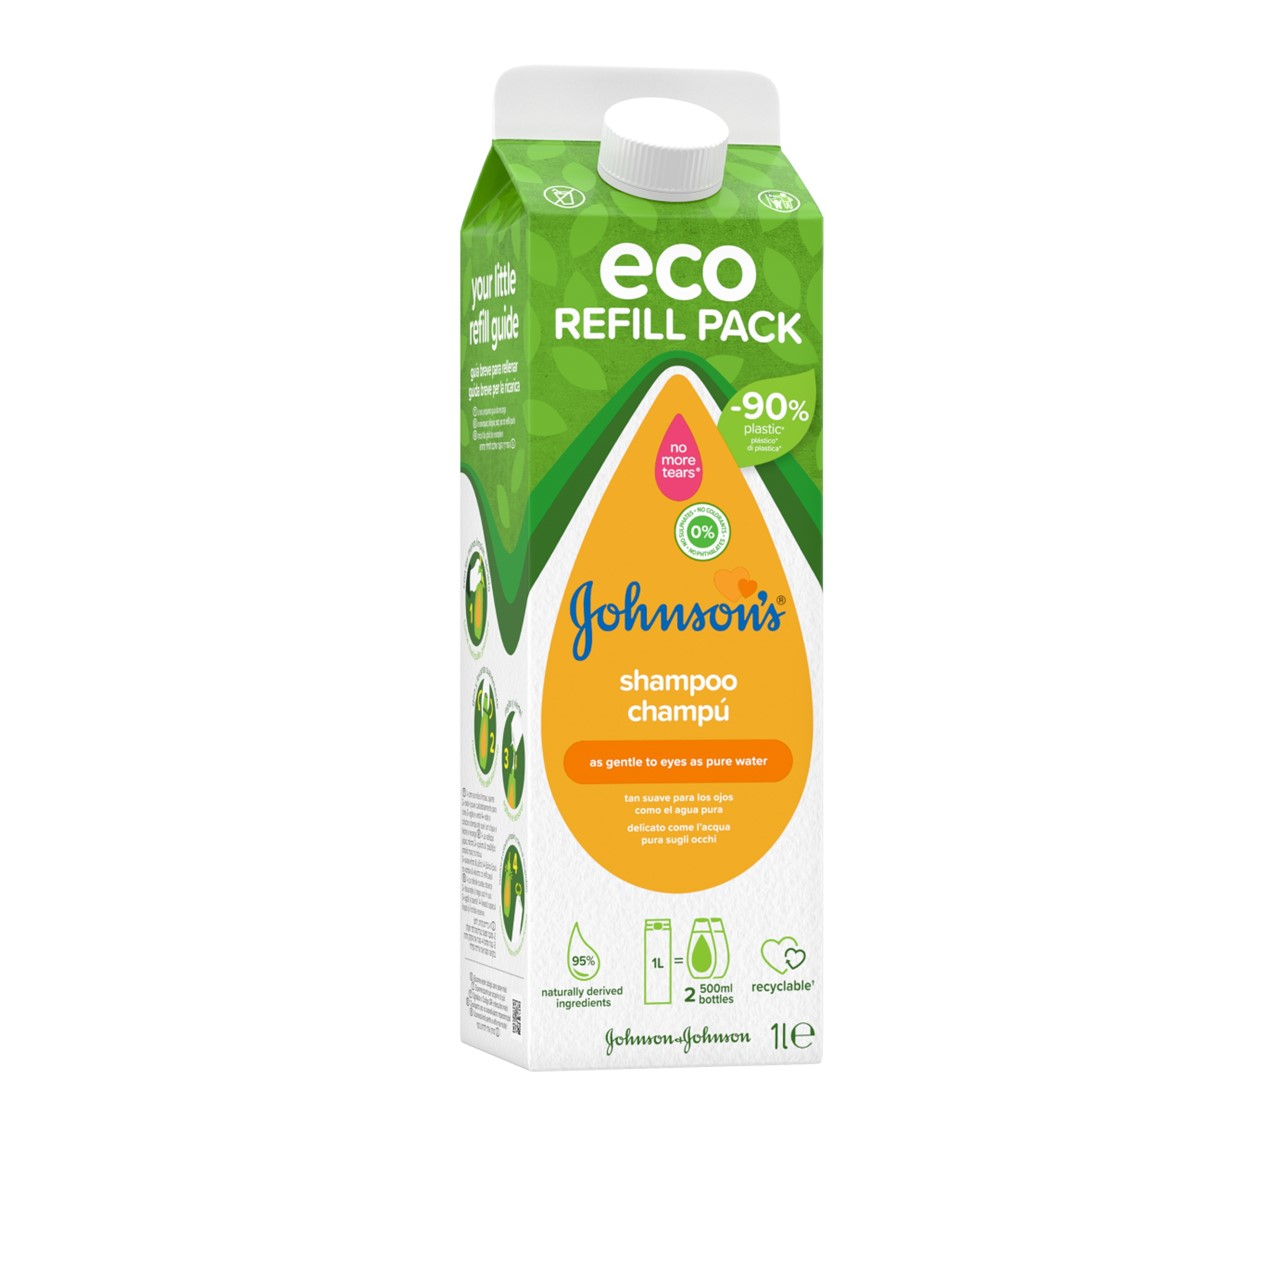 Buy Johnson's Baby Shampoo With Pump 750ml · Seychelles